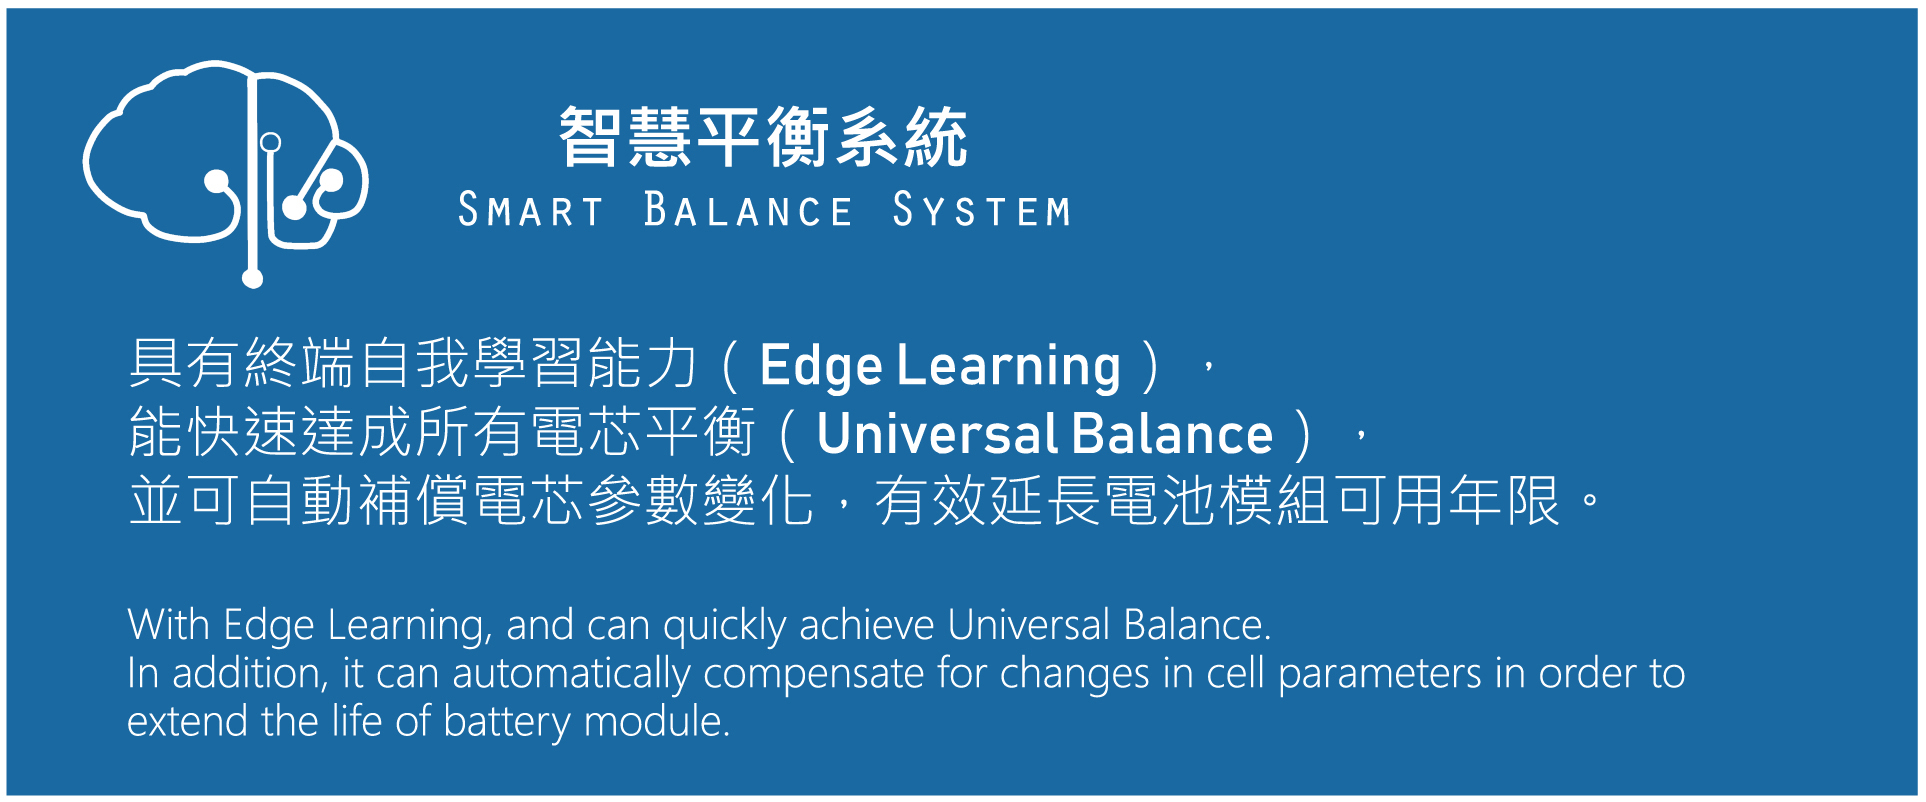 智慧平衡系統 Smart Balance System